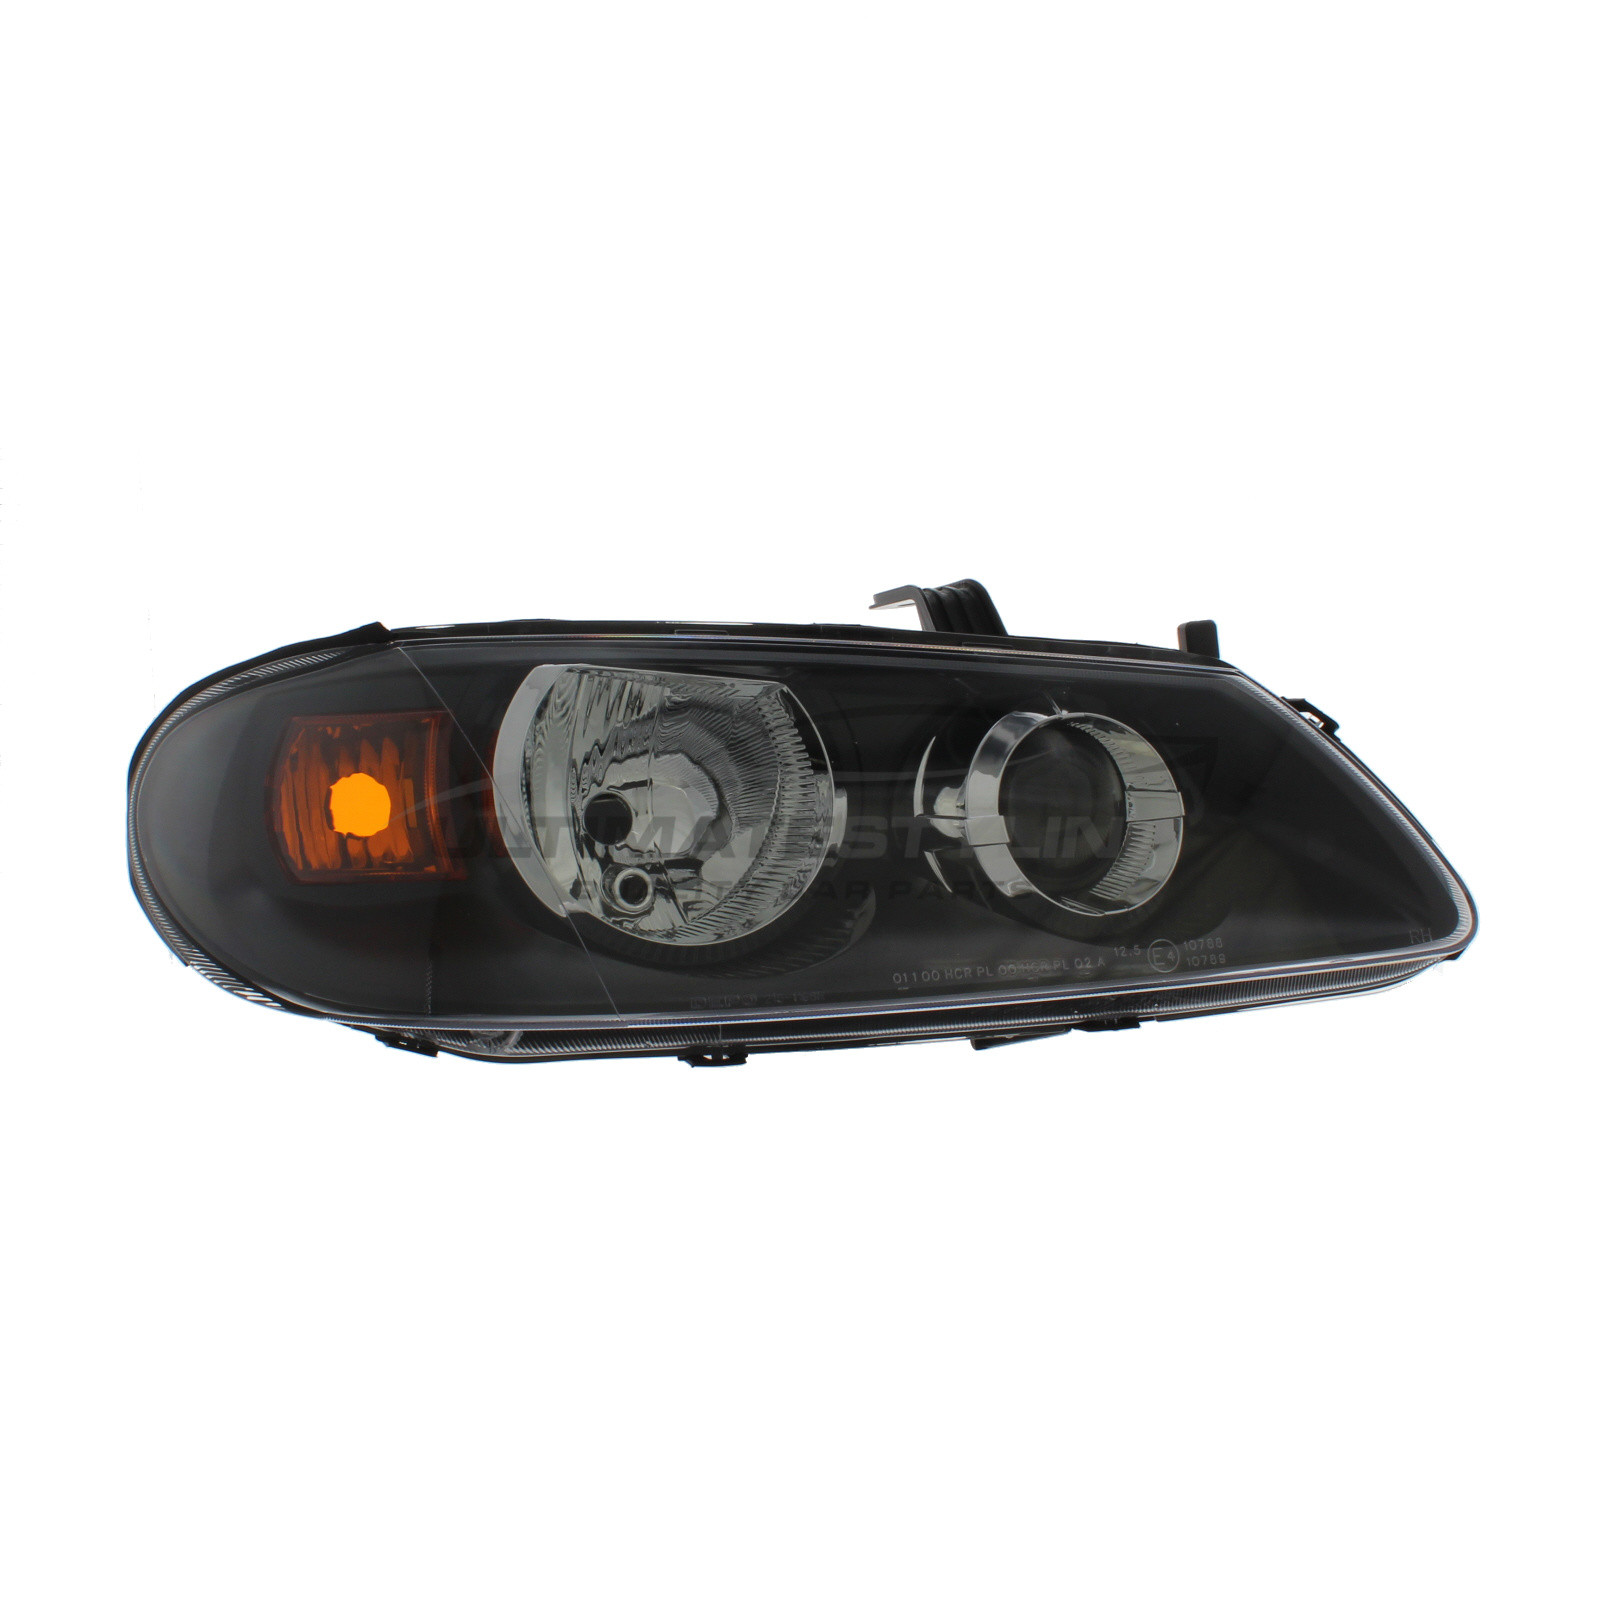 Headlight / Headlamp for Nissan Almera